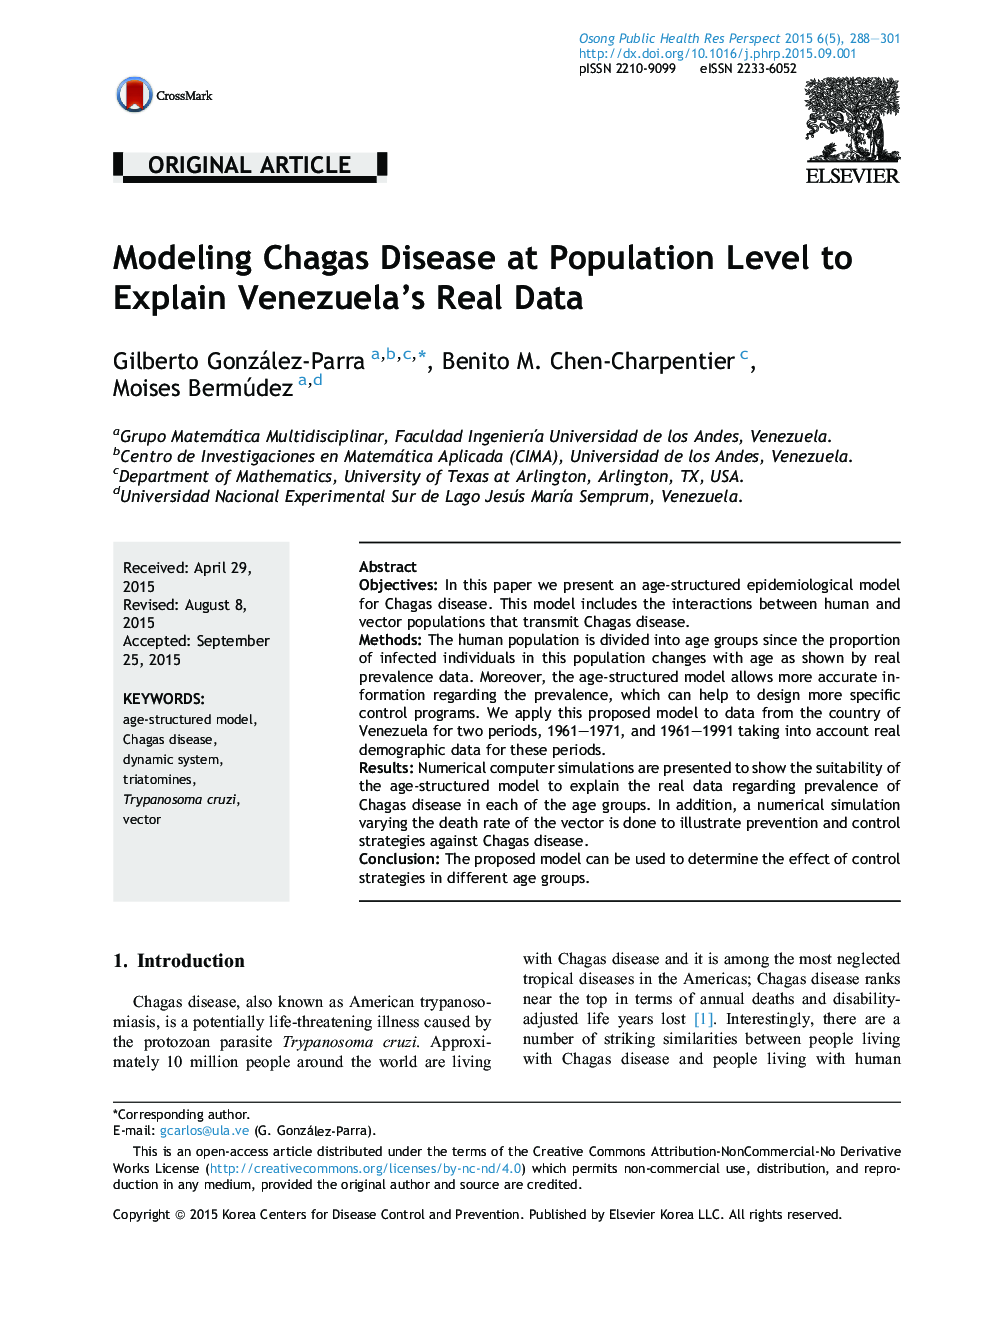 Modeling Chagas Disease at Population Level to Explain Venezuela's Real Data 